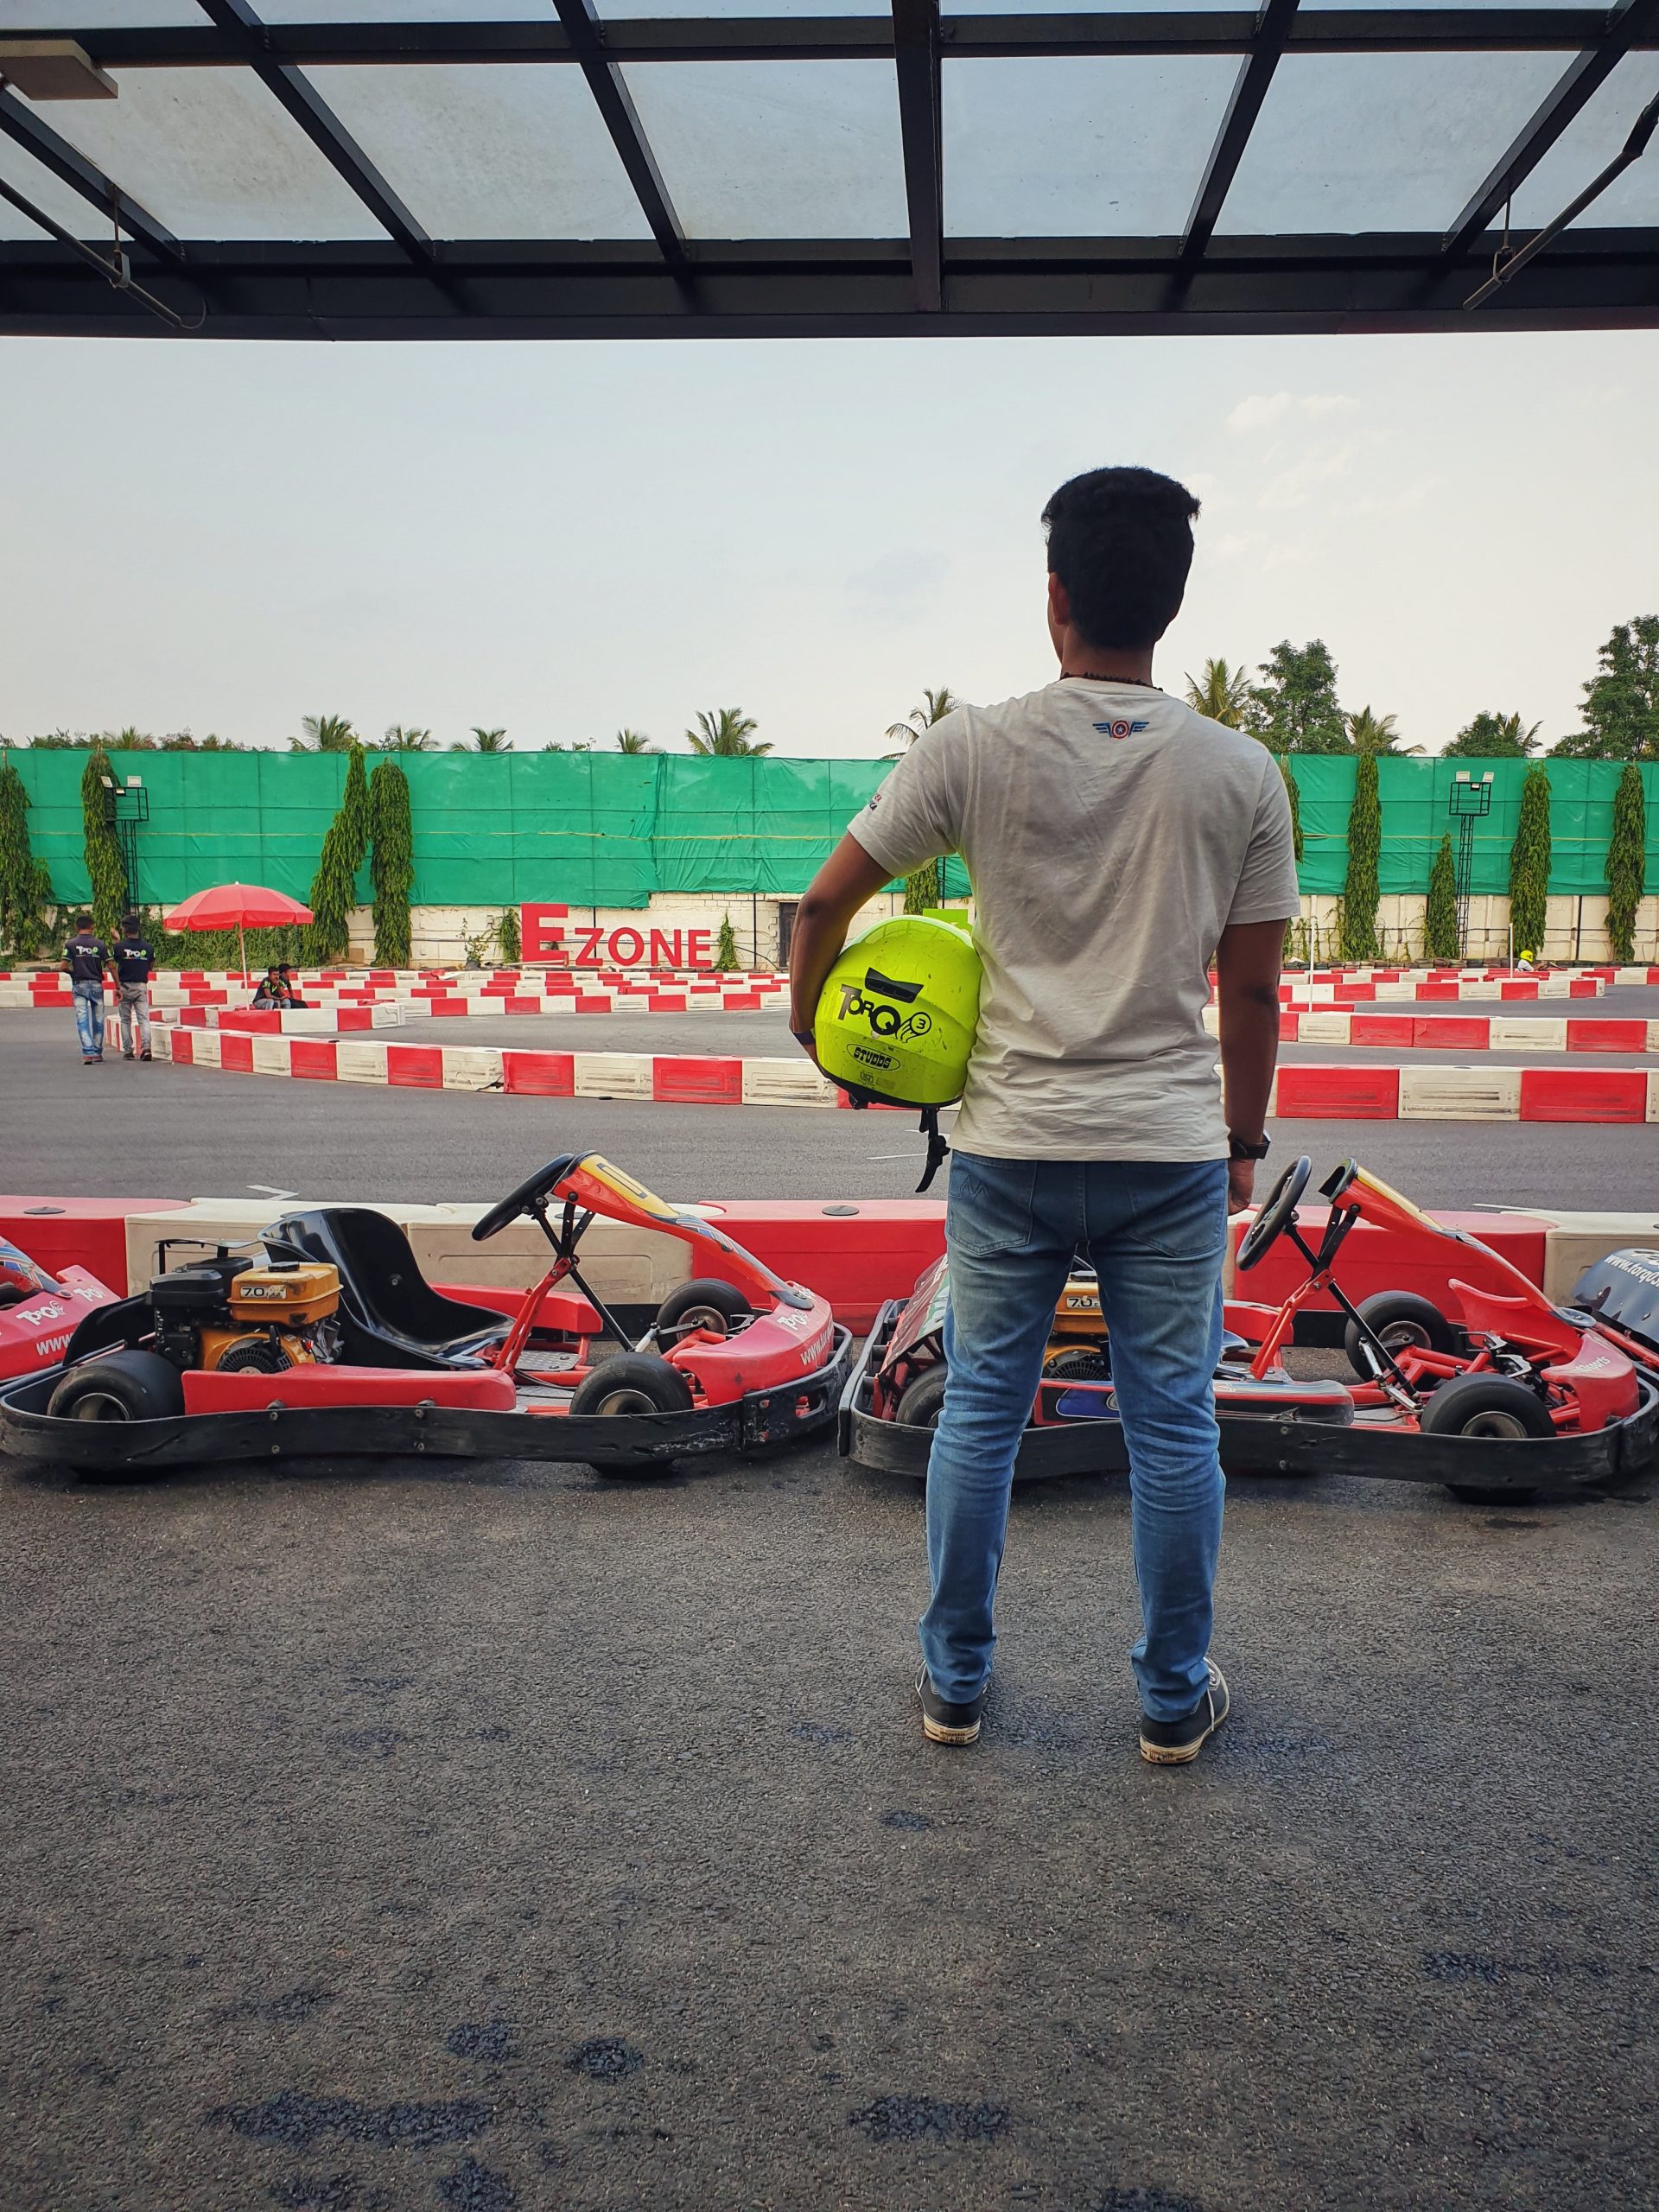 karts on a racing track